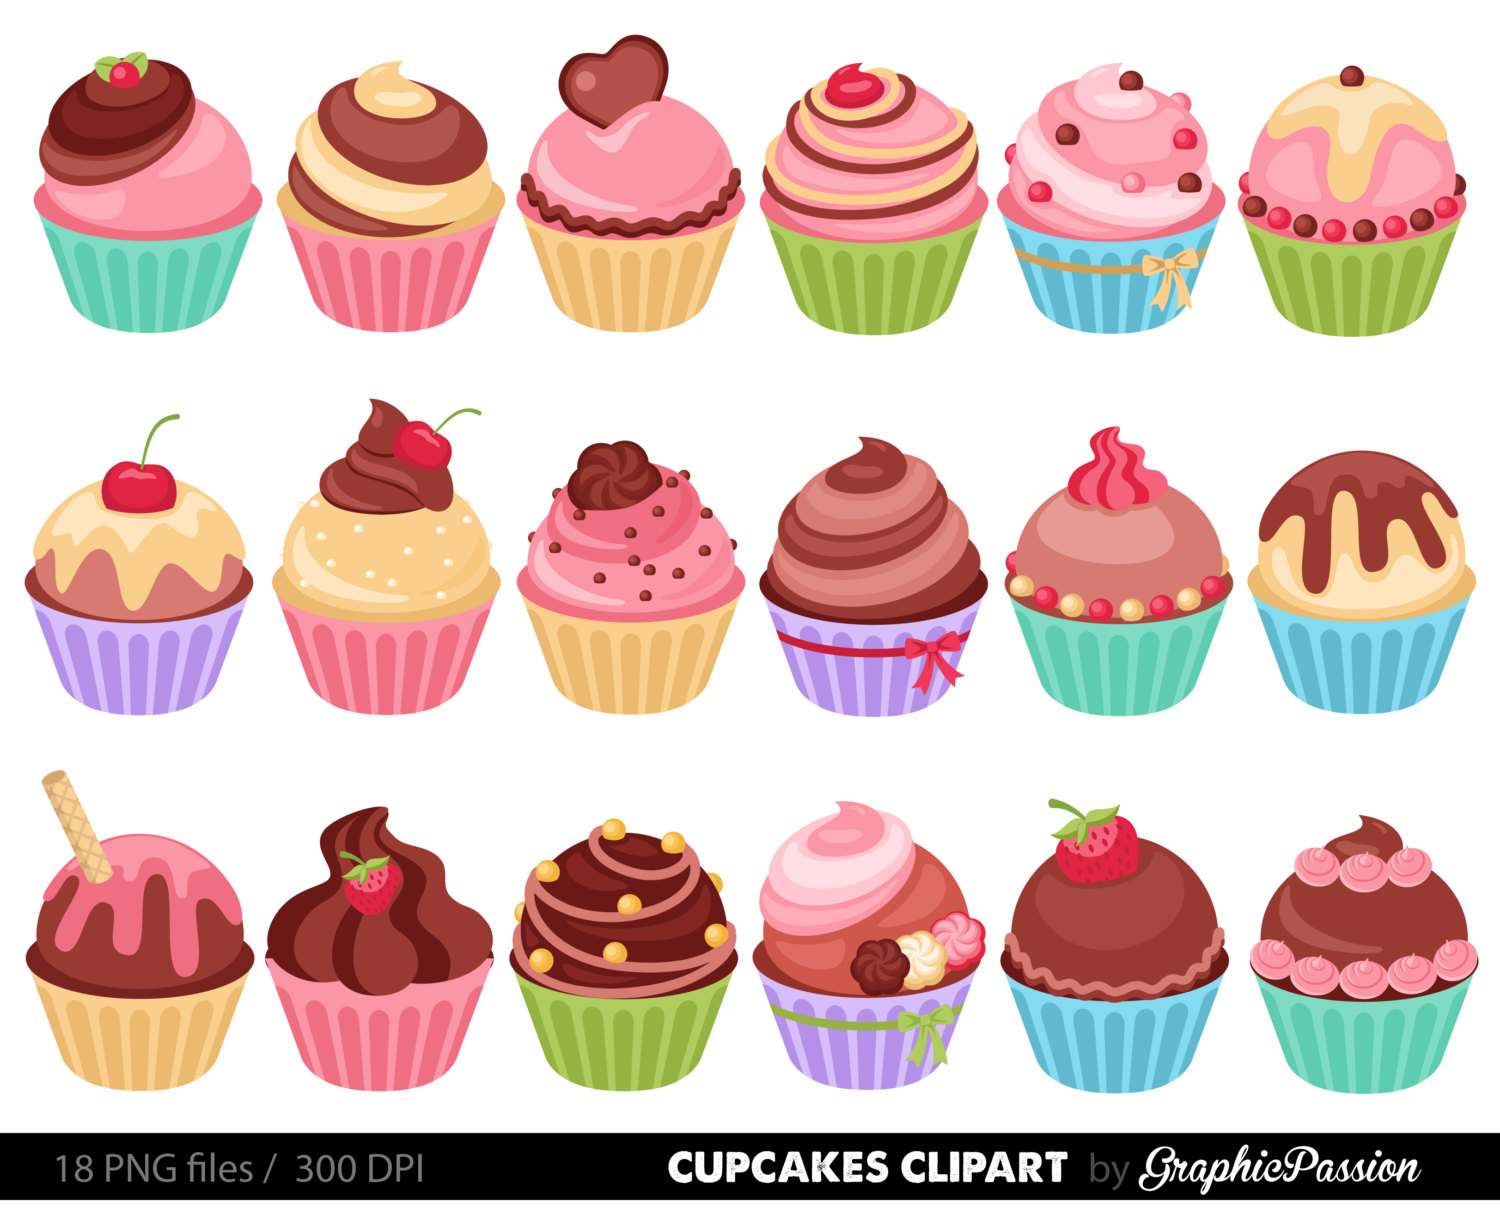 Cupcakes clipart digital cupc - Cupcakes Clipart